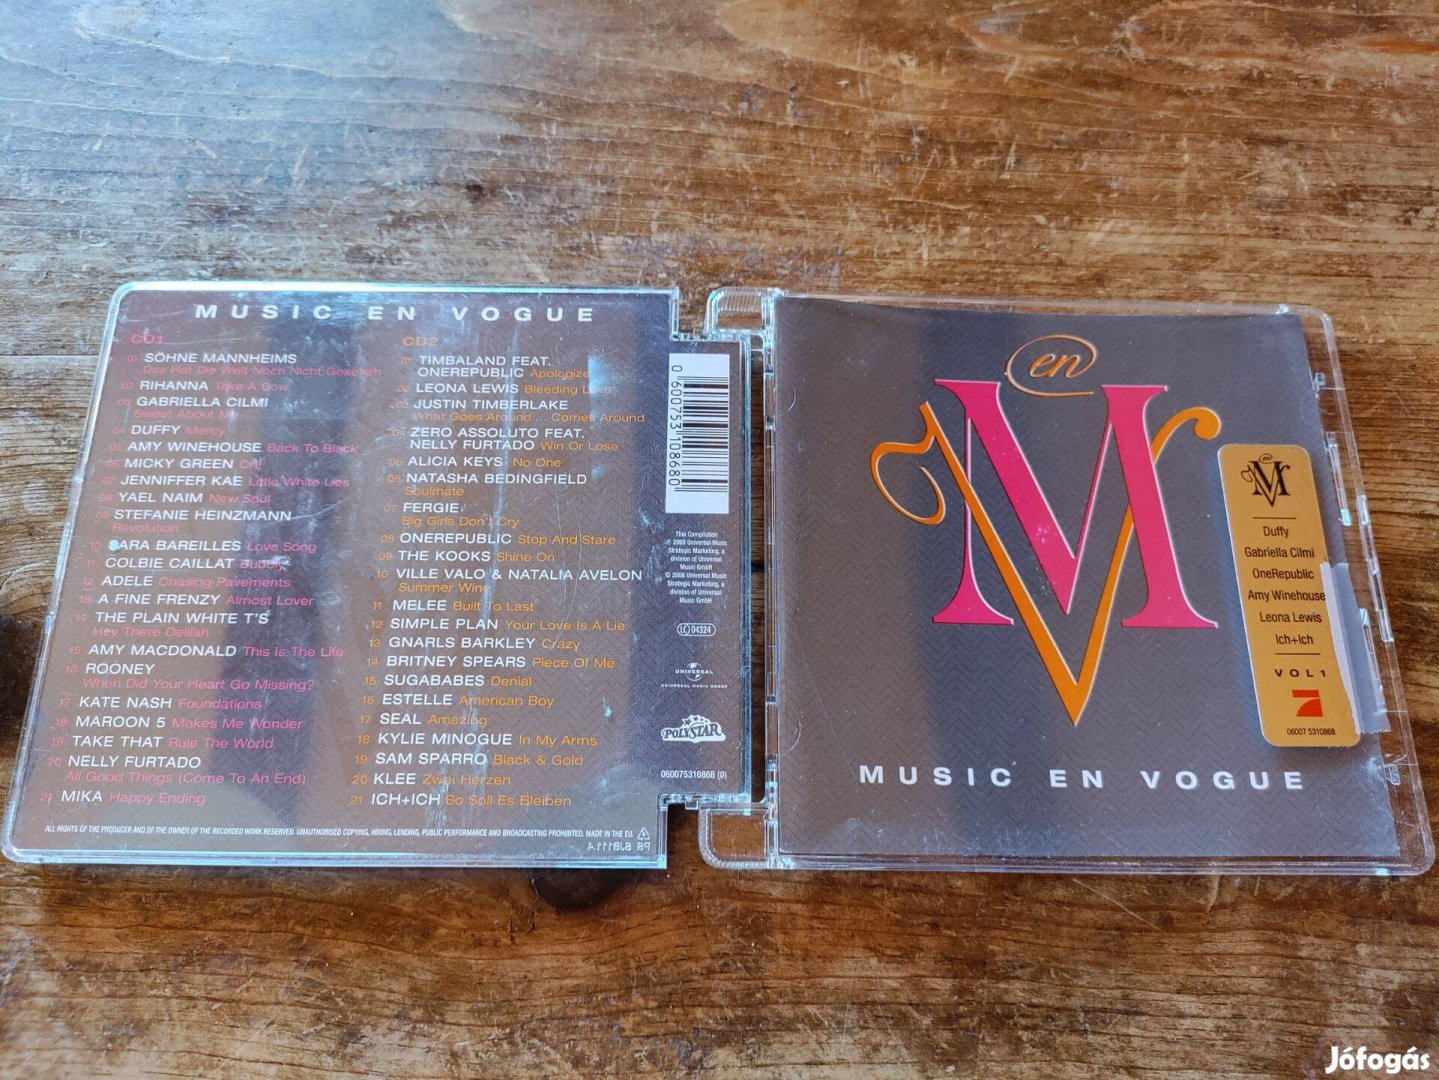 En vogue - Music 2 CD